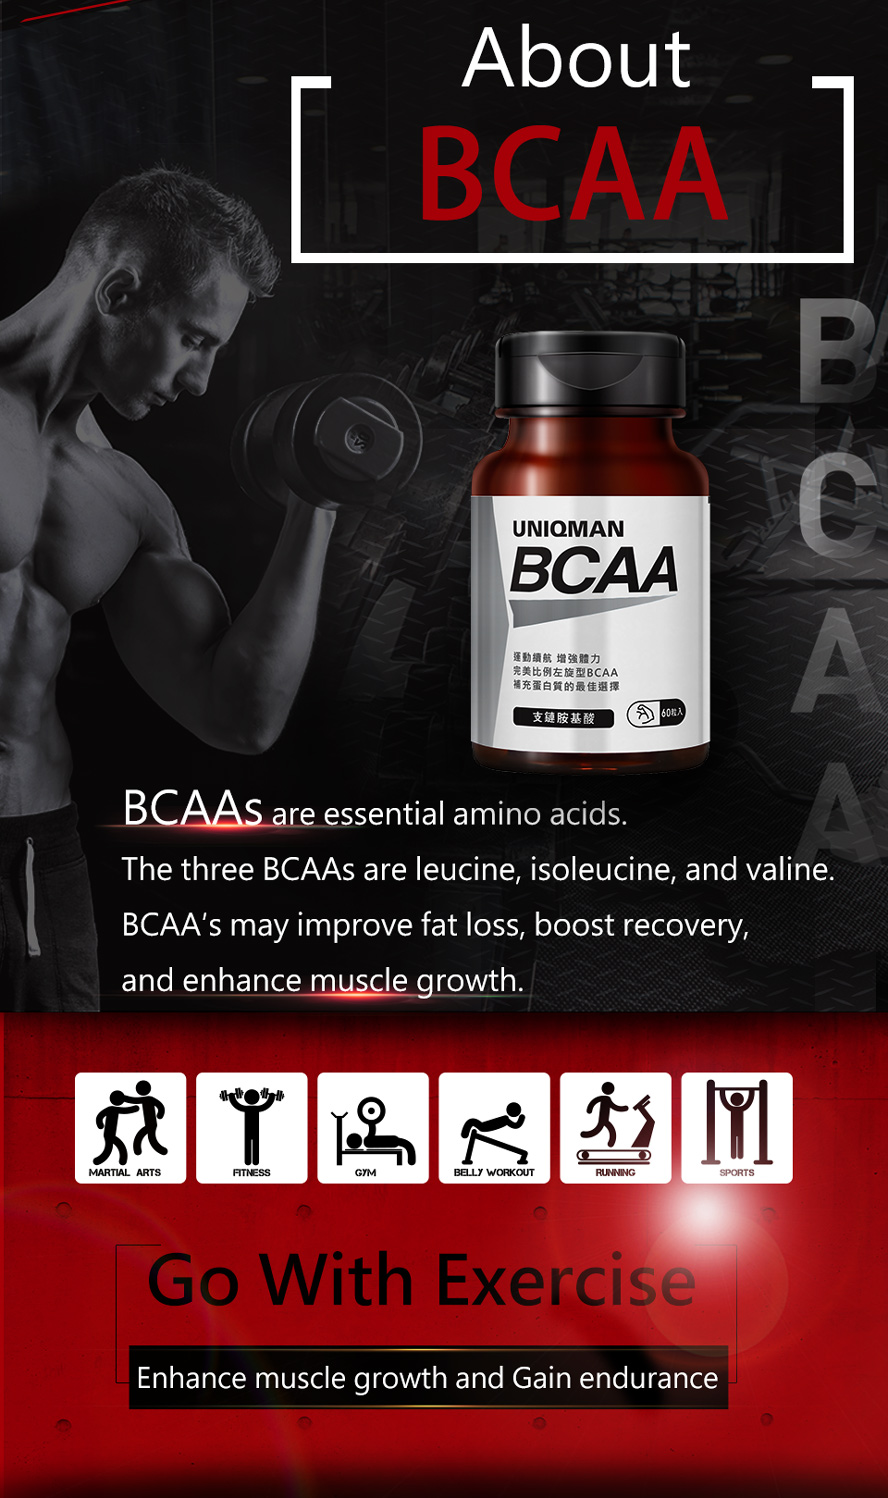 UNIQMAN BCAA can enhance exerciese performance